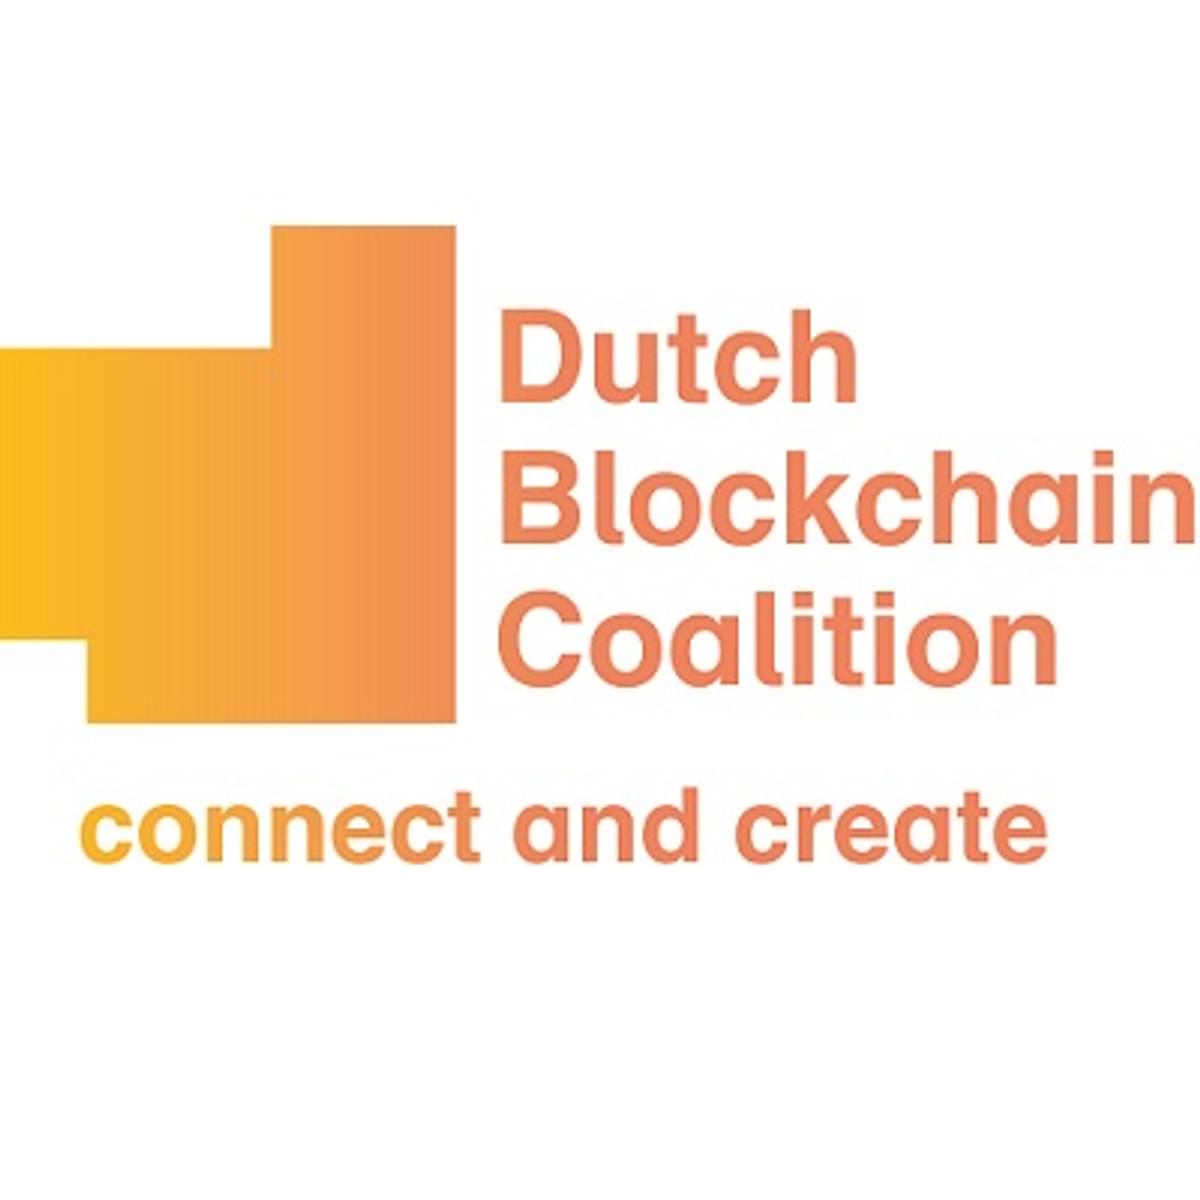 Dutch Blockchain Coalition lanceert gratis online cursus image